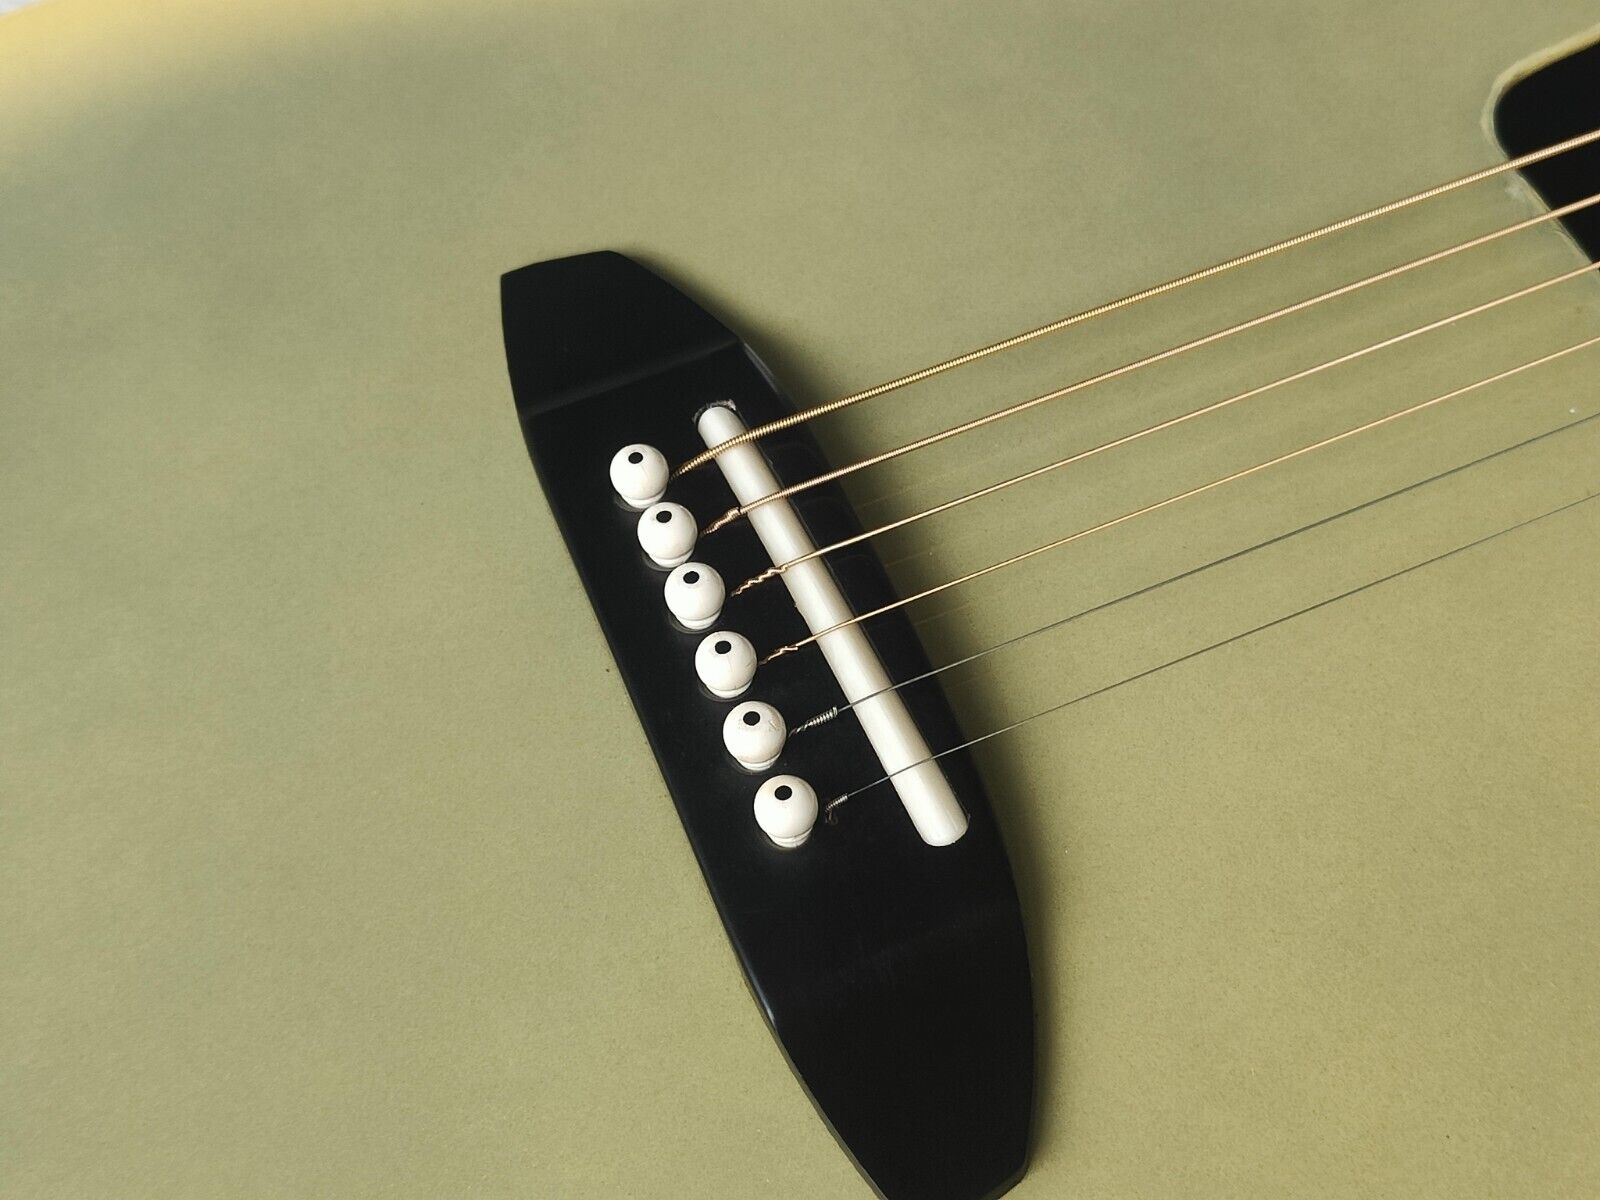 1980's Tokai Folkel Carbon Body Acoustic Guitar